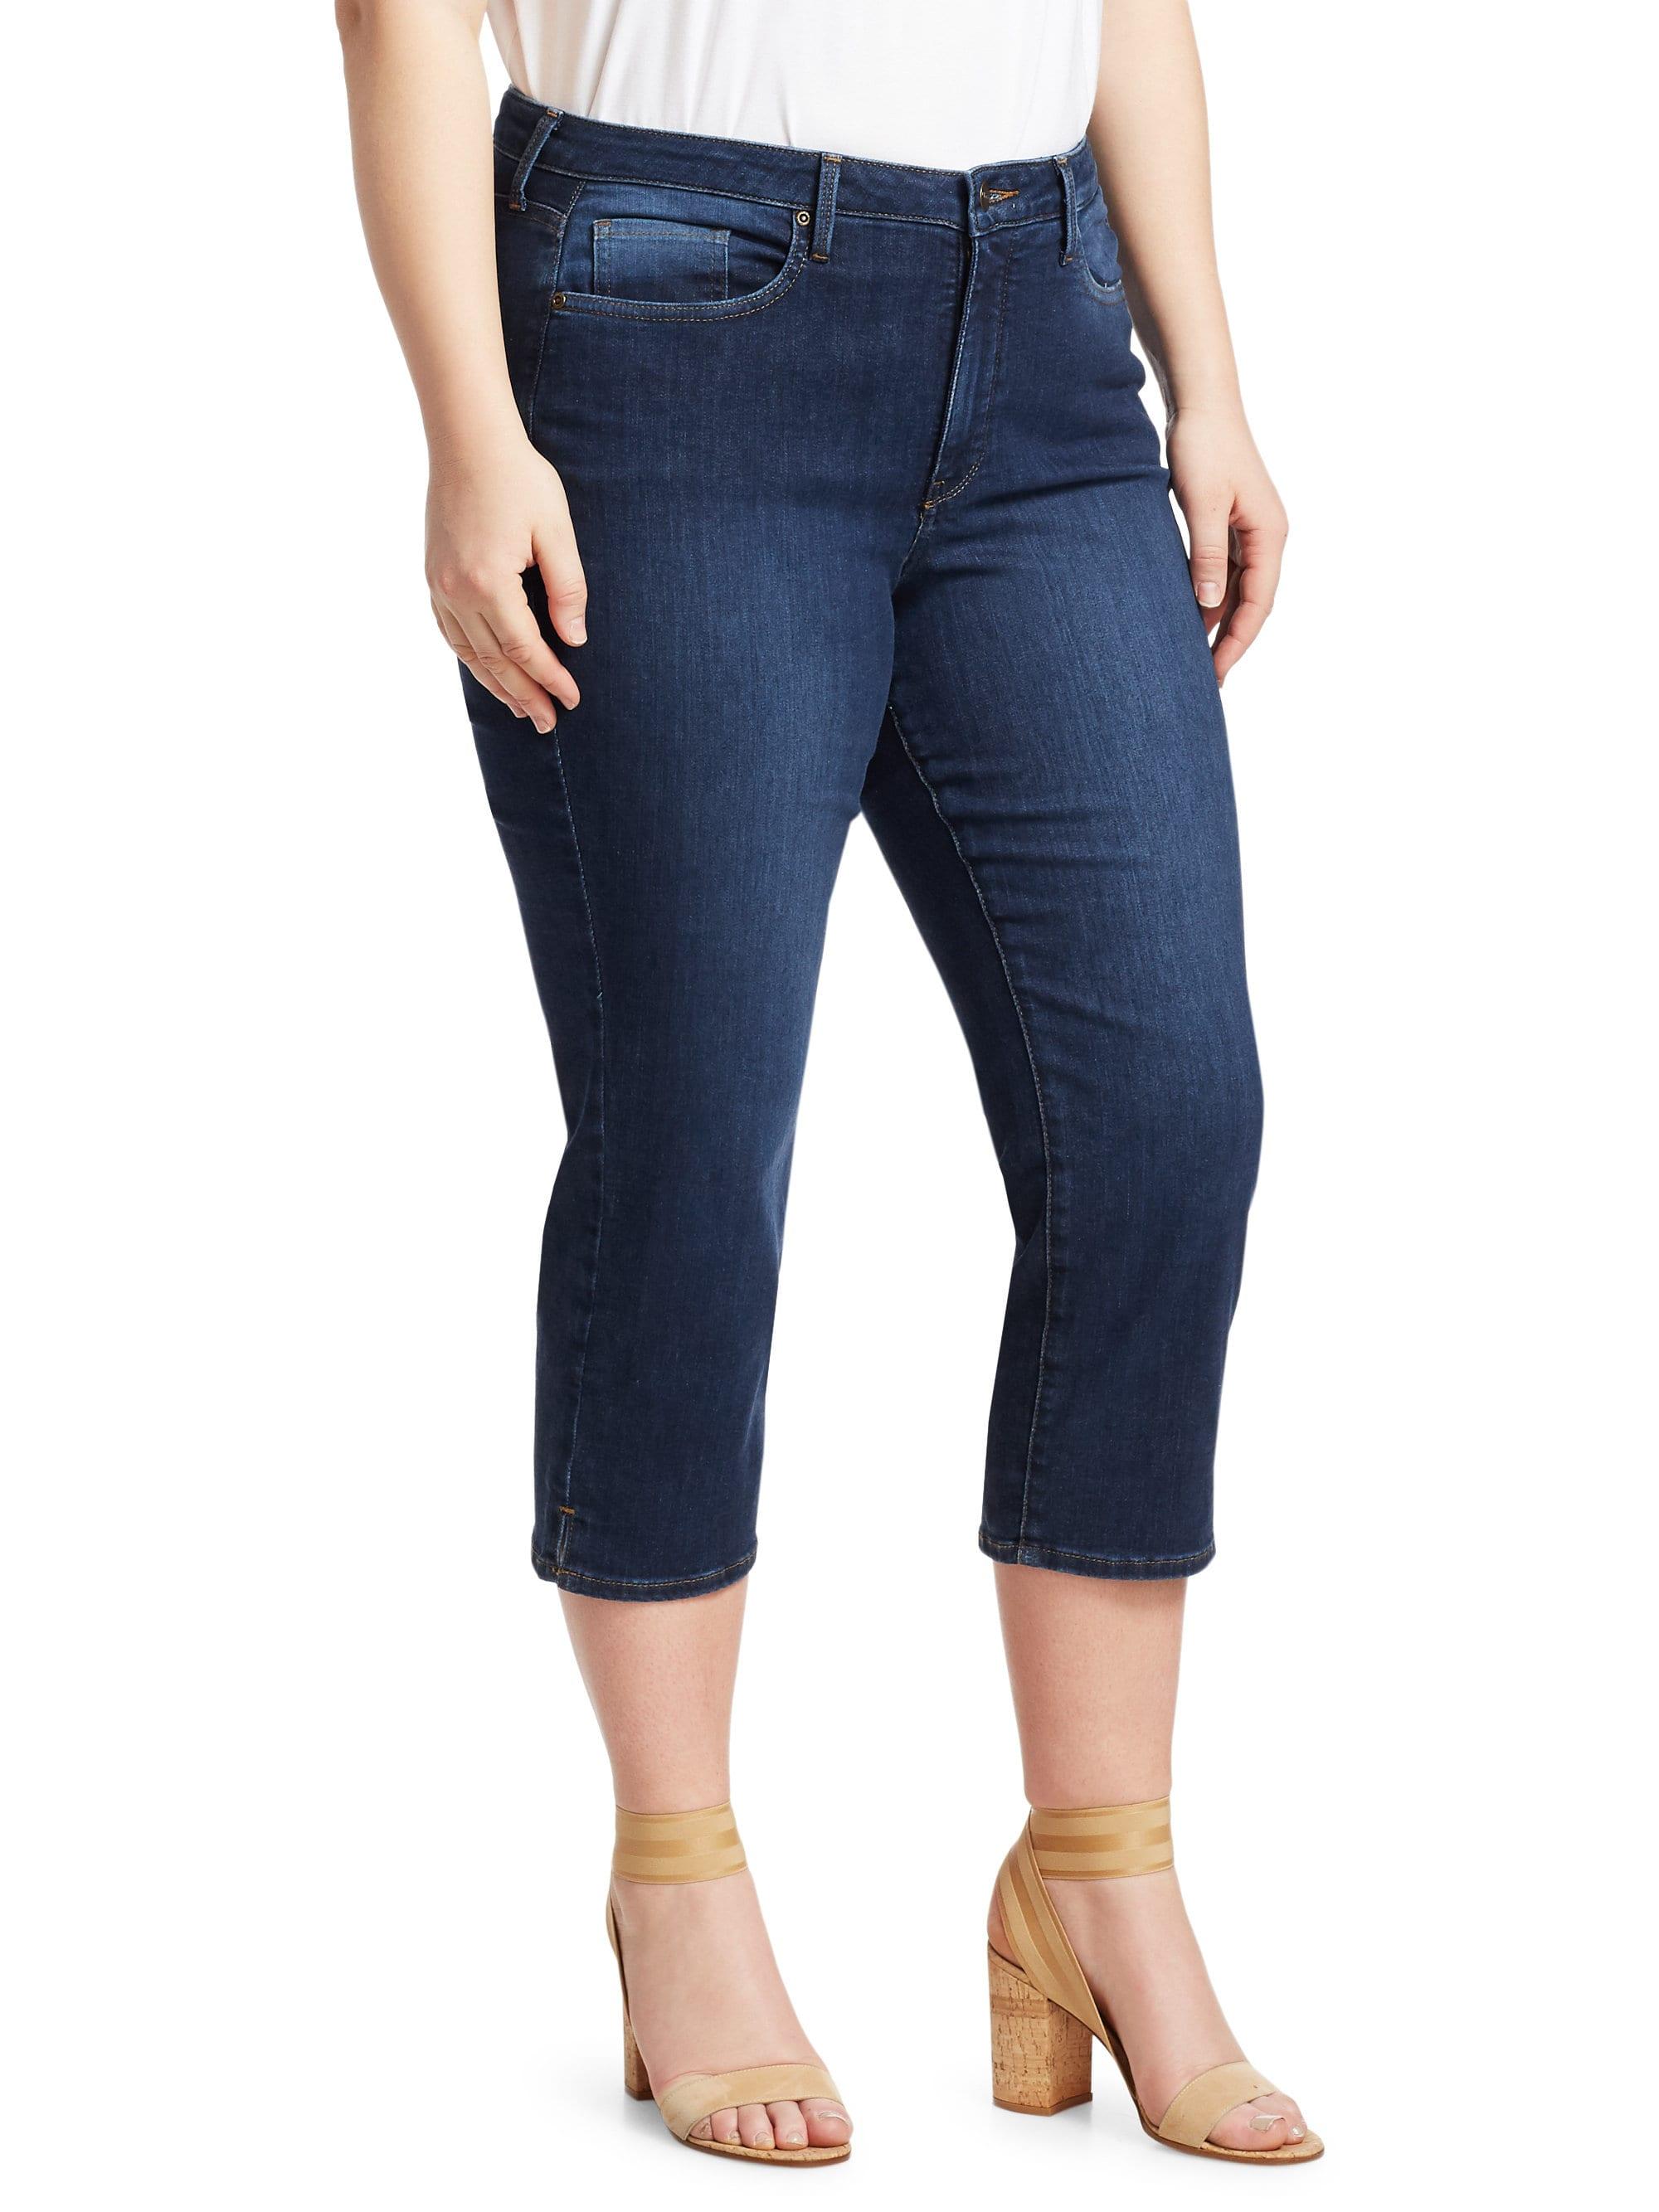 NYDJ Capri Side Slit Jeans in Blue - Lyst